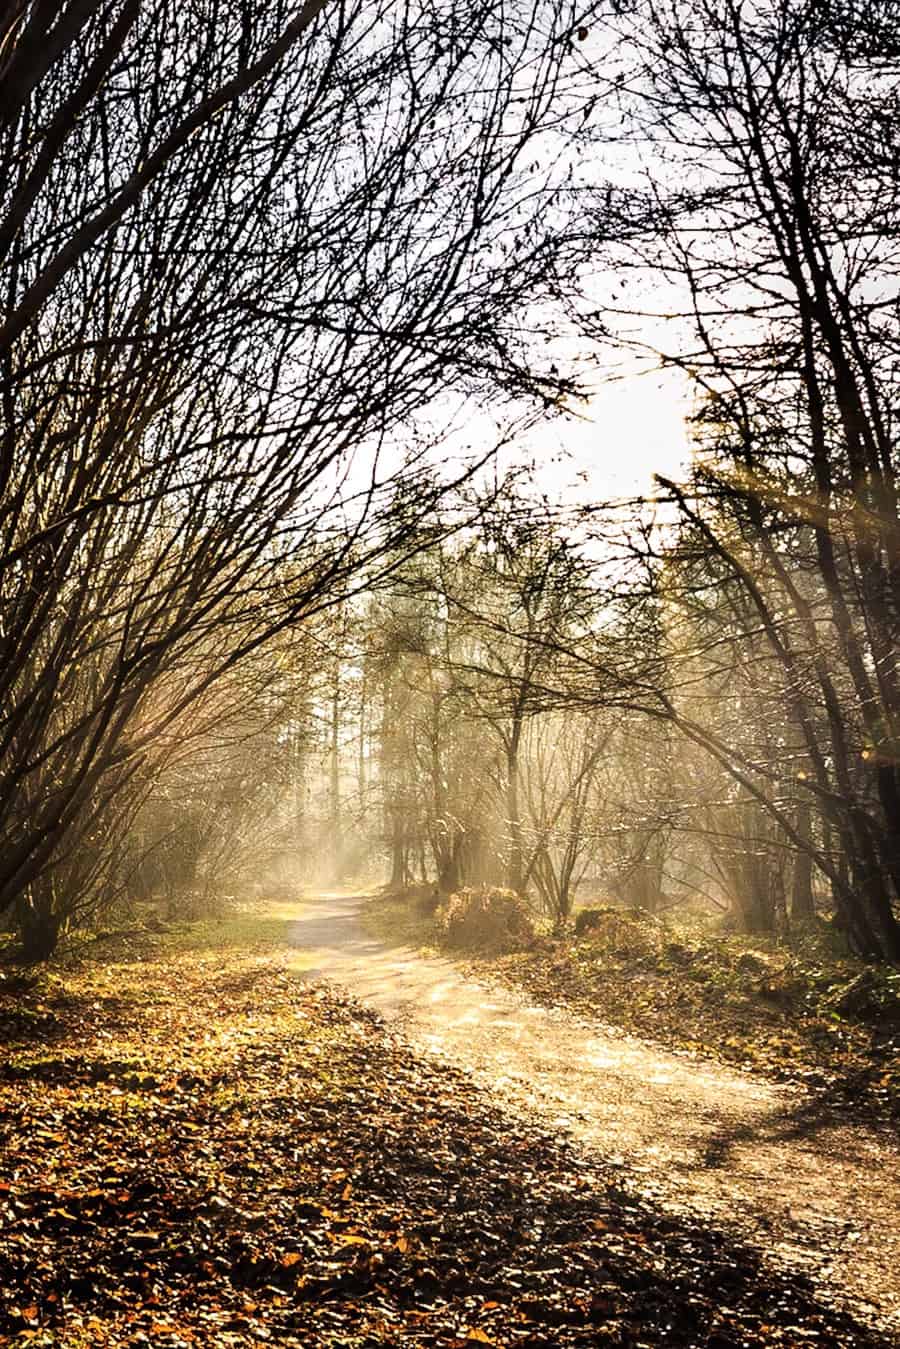  Misty path by Rick McEvoy landscape photographer in Hampshire   